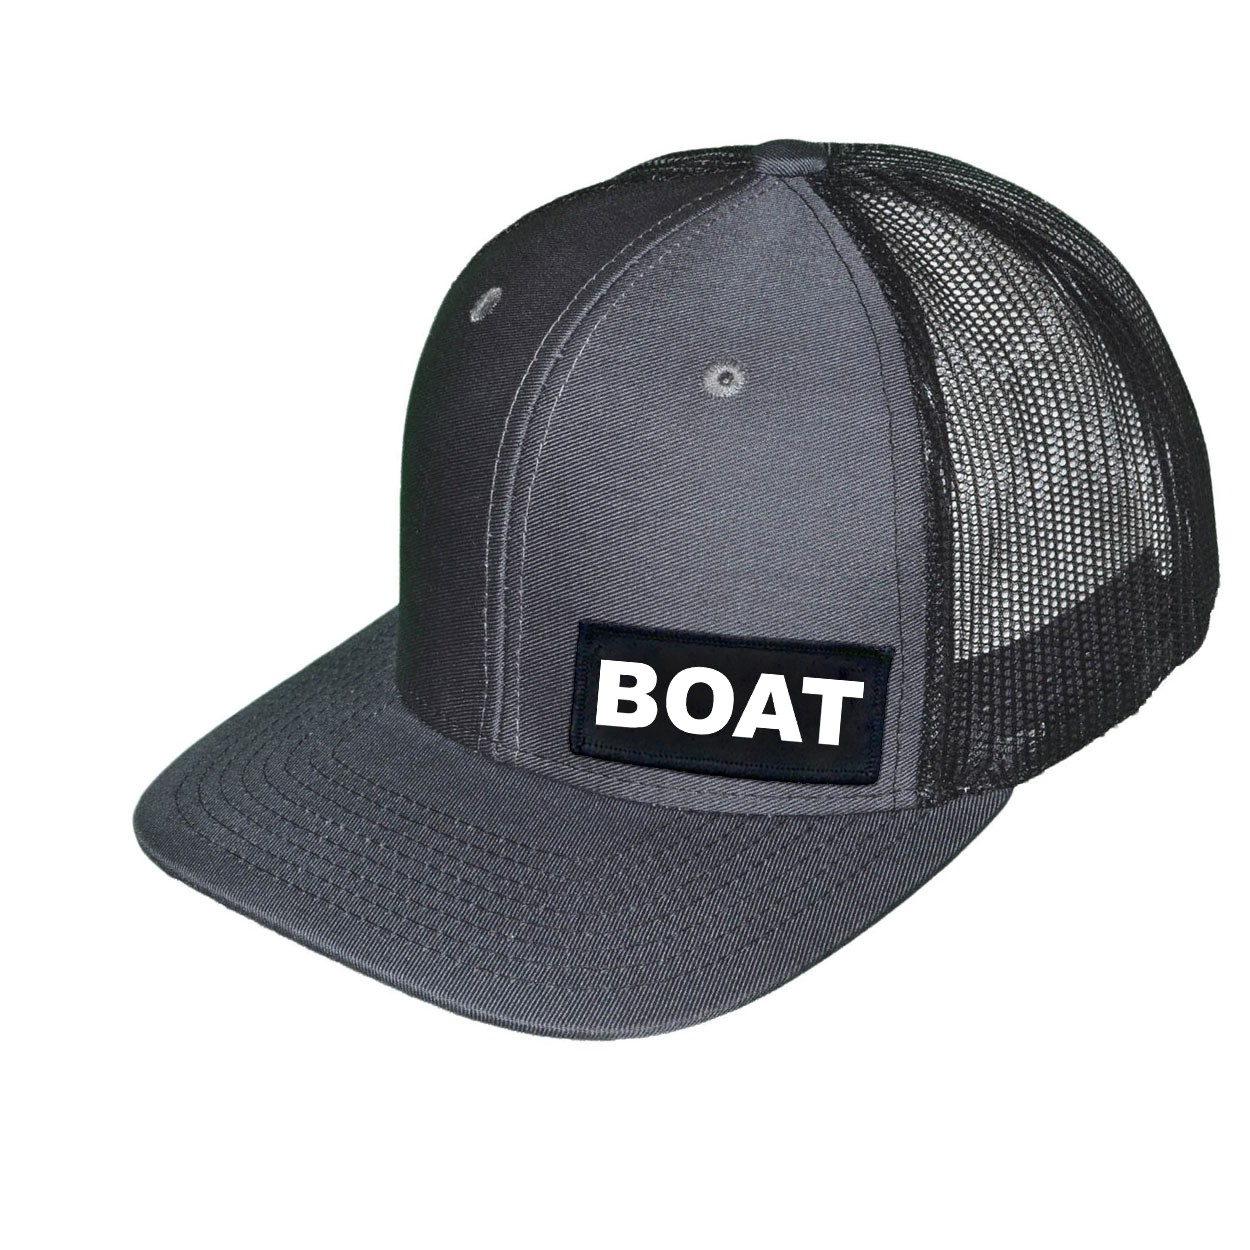 Boat Brand Logo Night Out Woven Patch Snapback Trucker Hat Dark Gray/Black (White Logo)